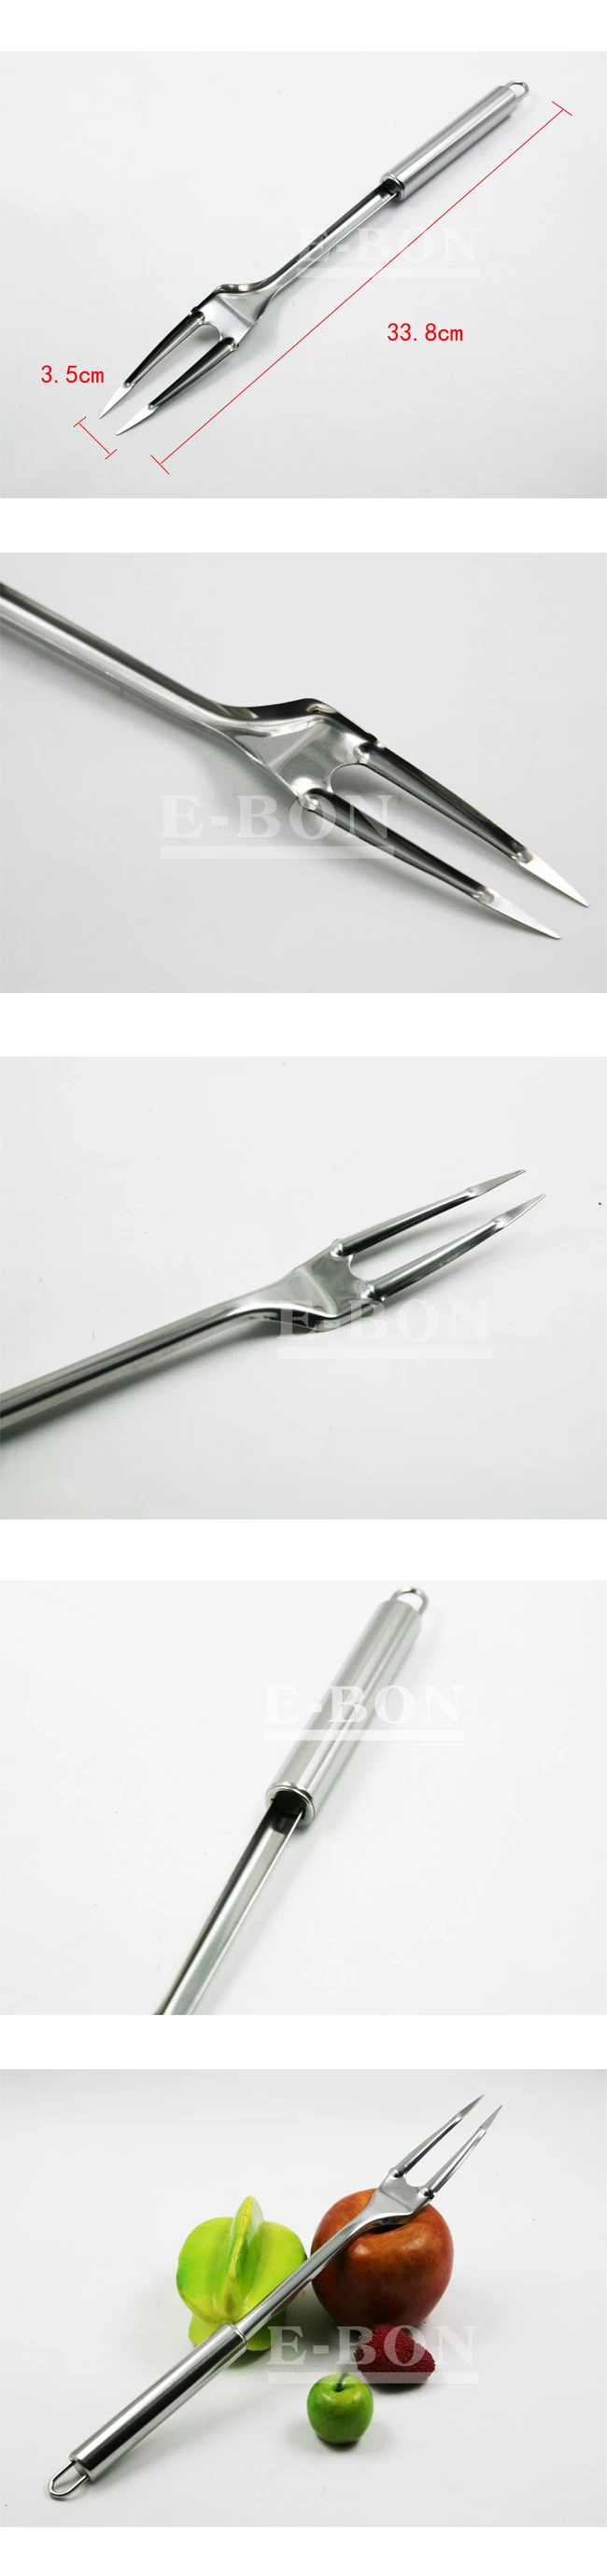 Stainless steel fork